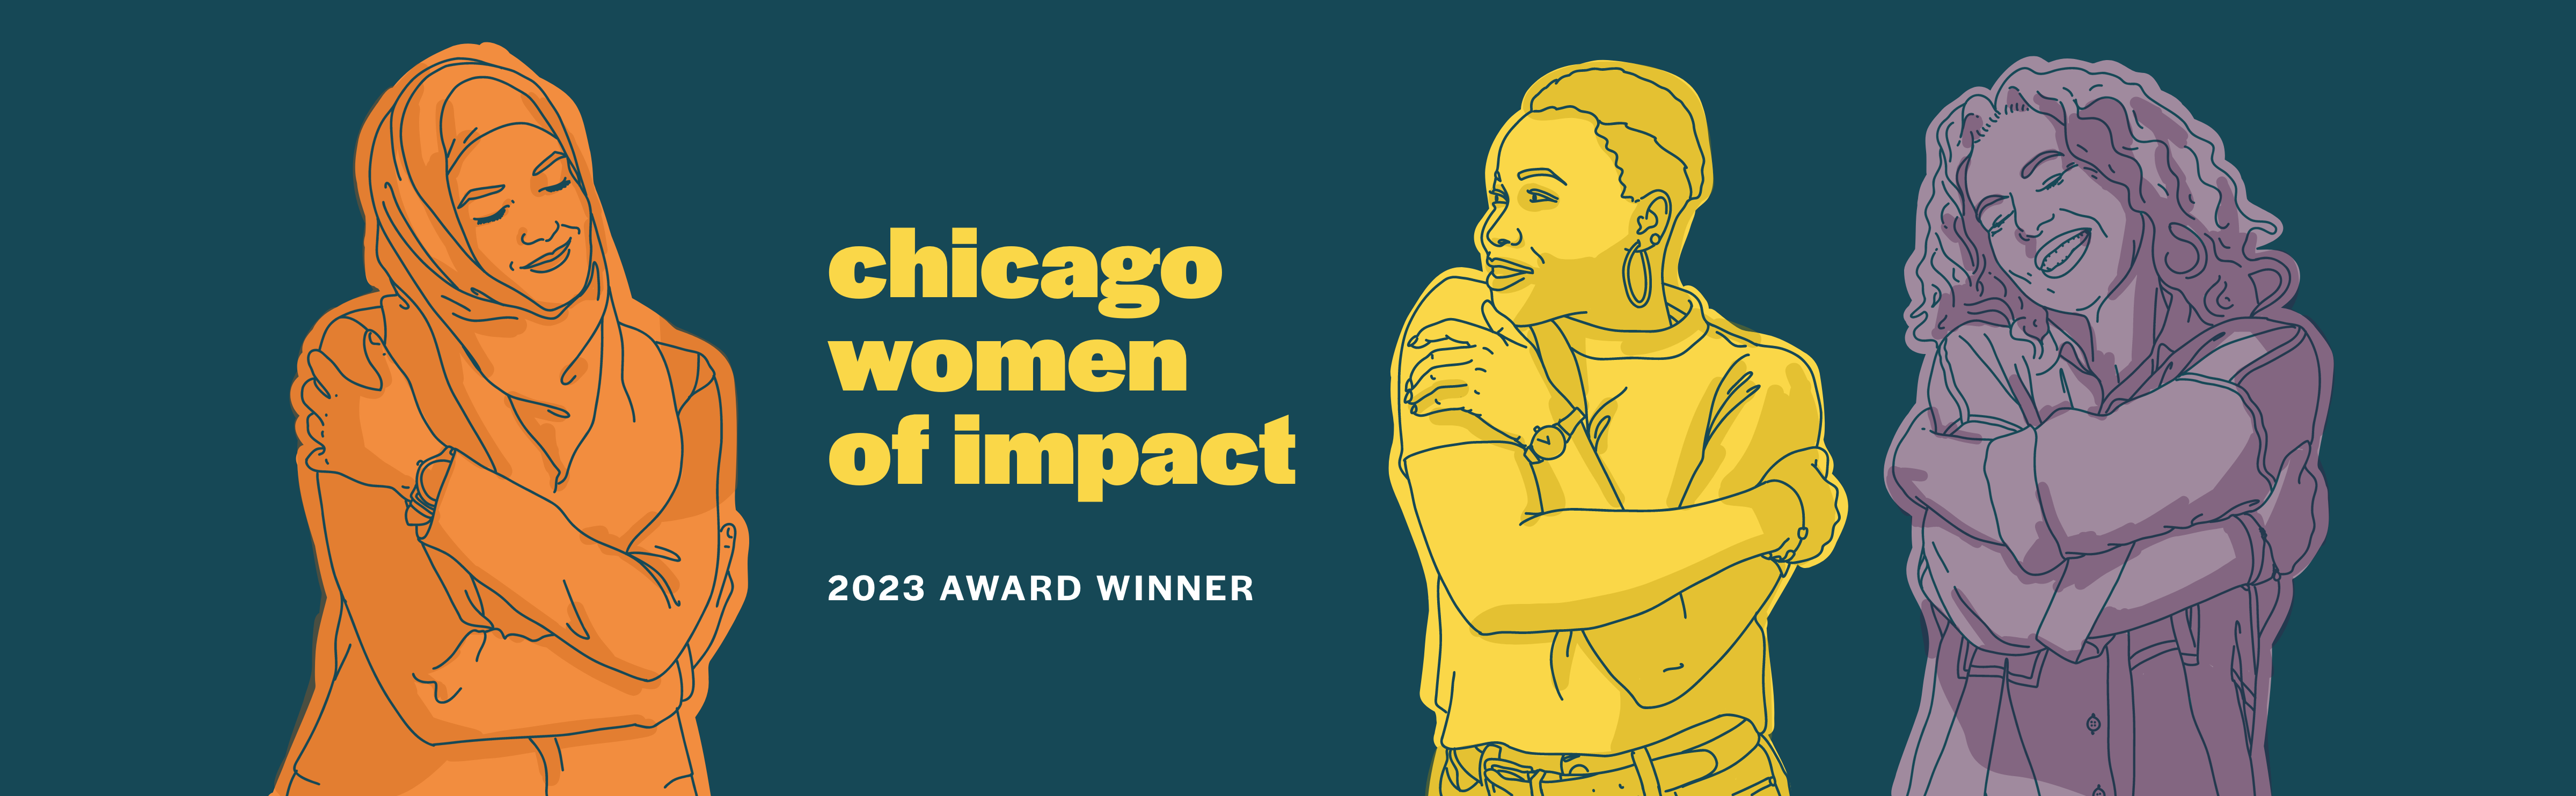 Illustration of three diverse women to celebrate the 2023 Chicago Women of Impact award.